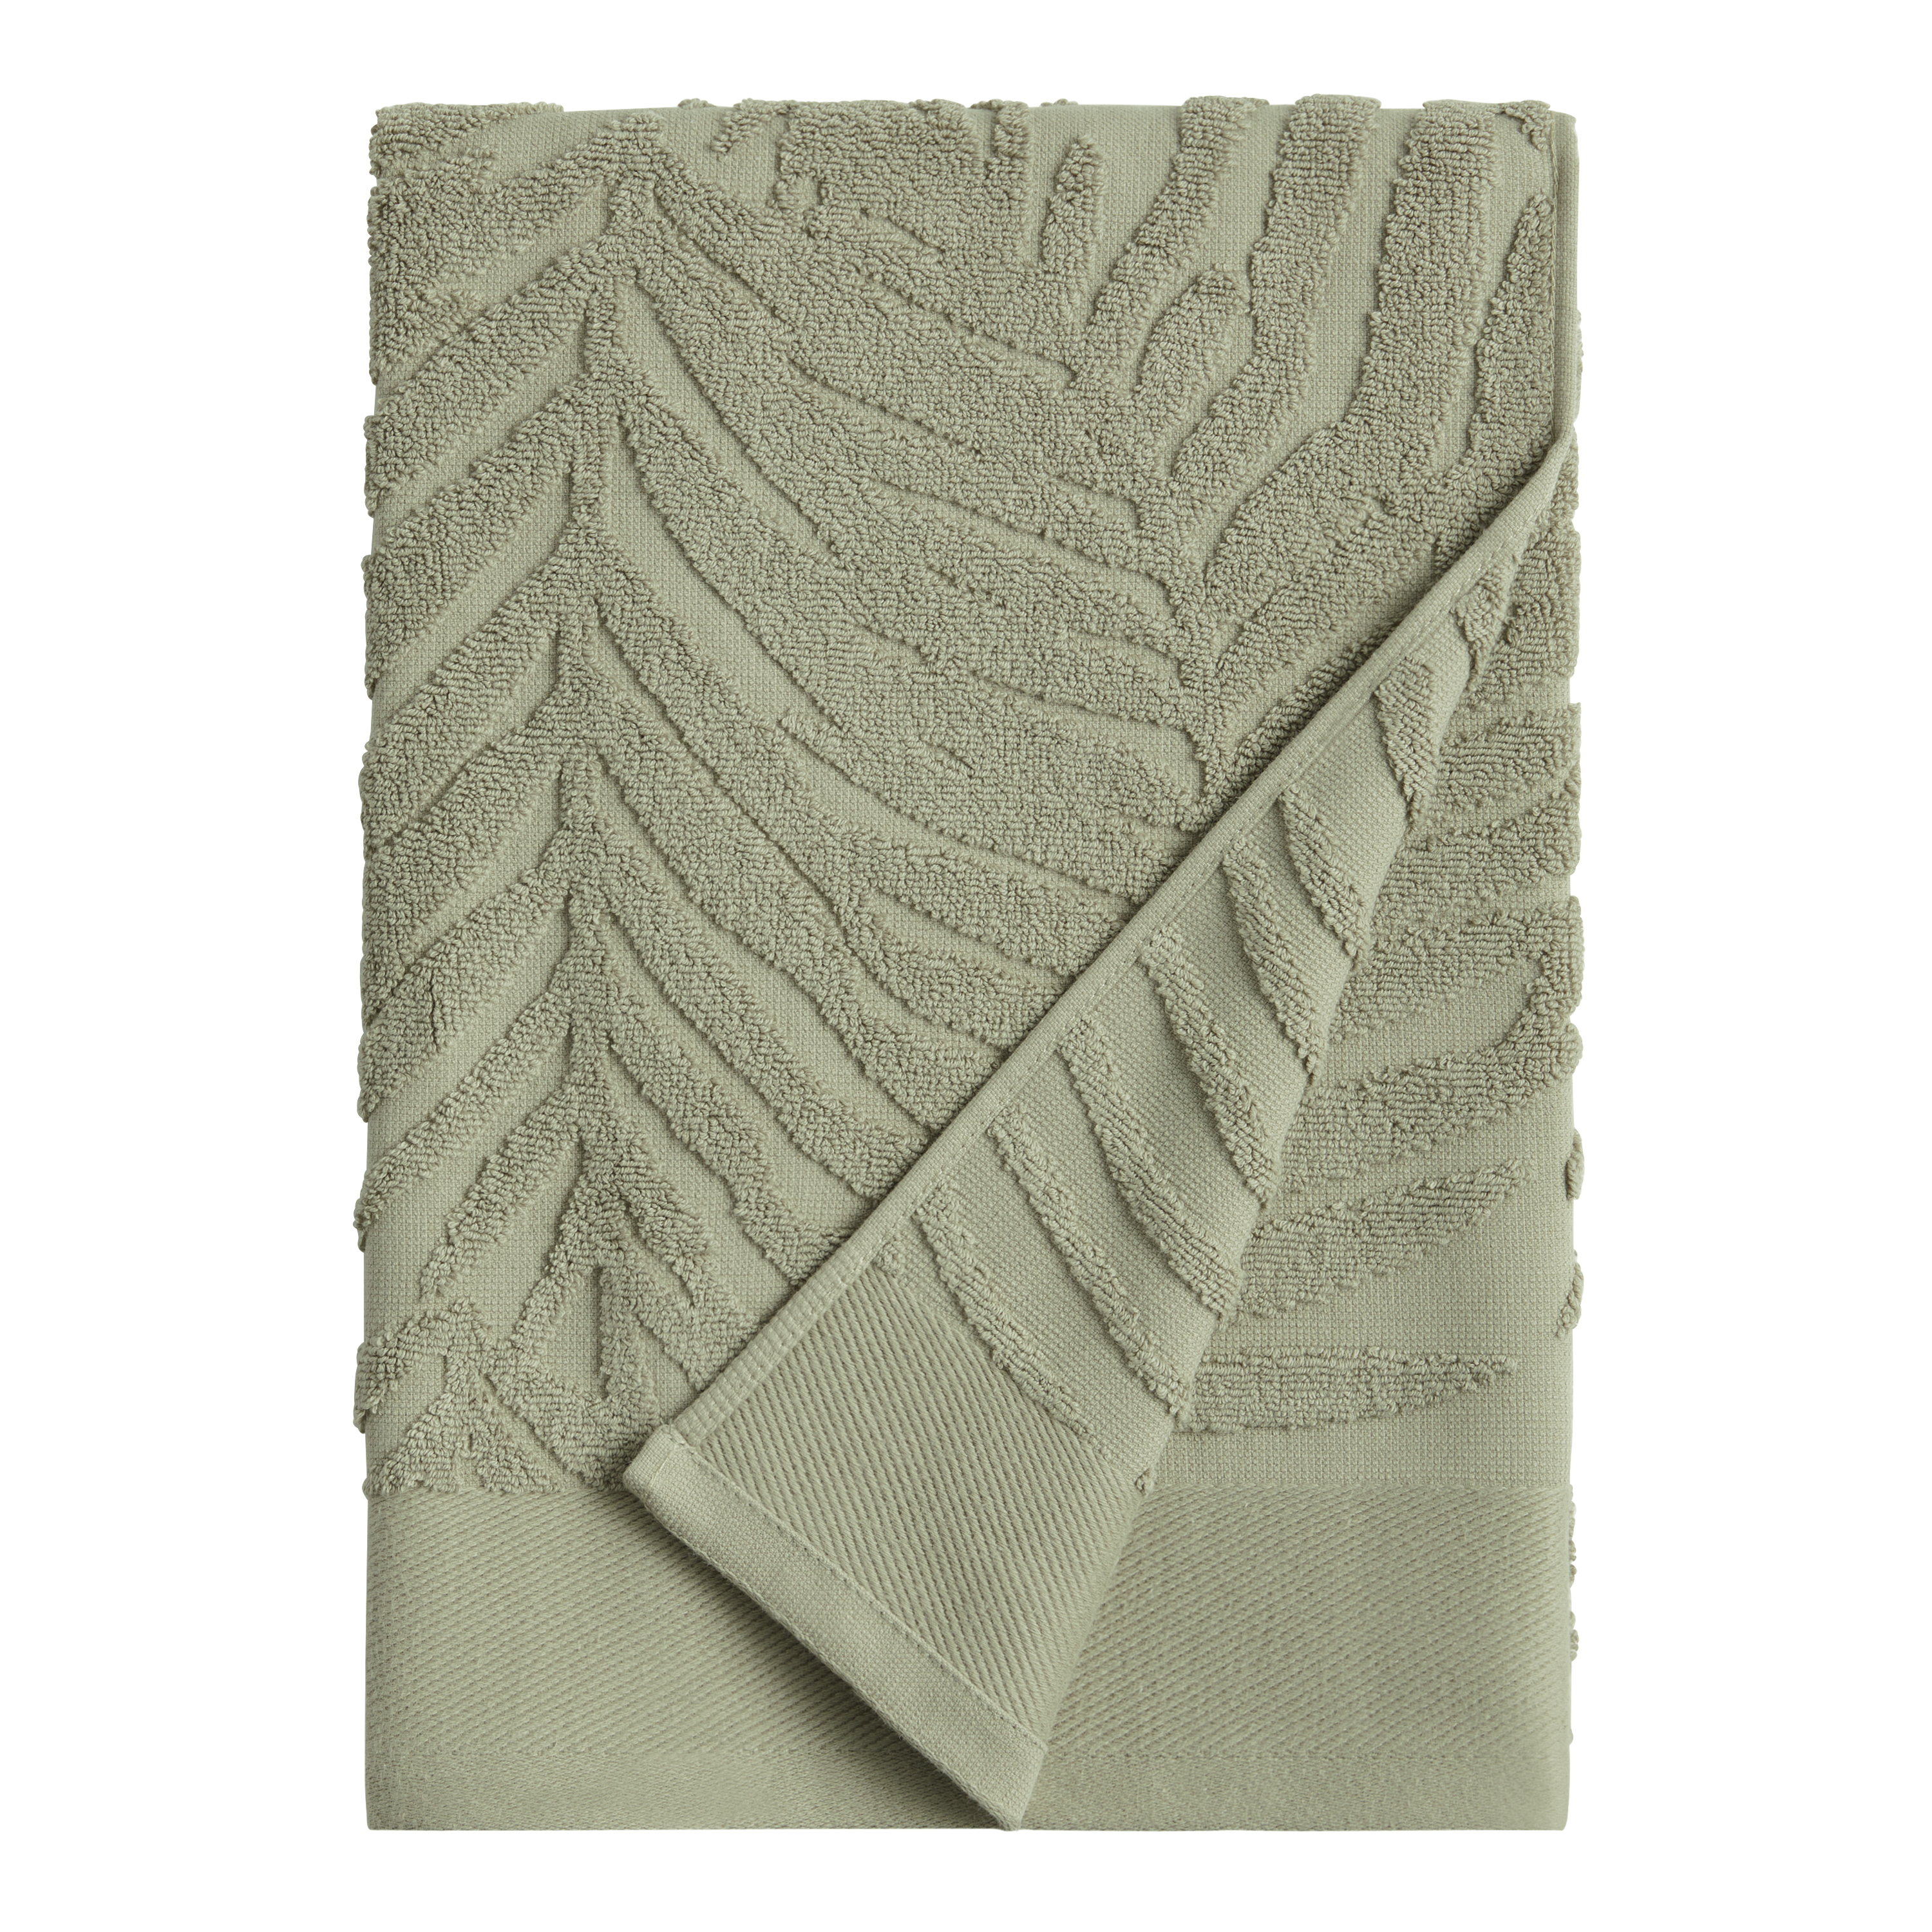 Plush Mint Green Hand Towel